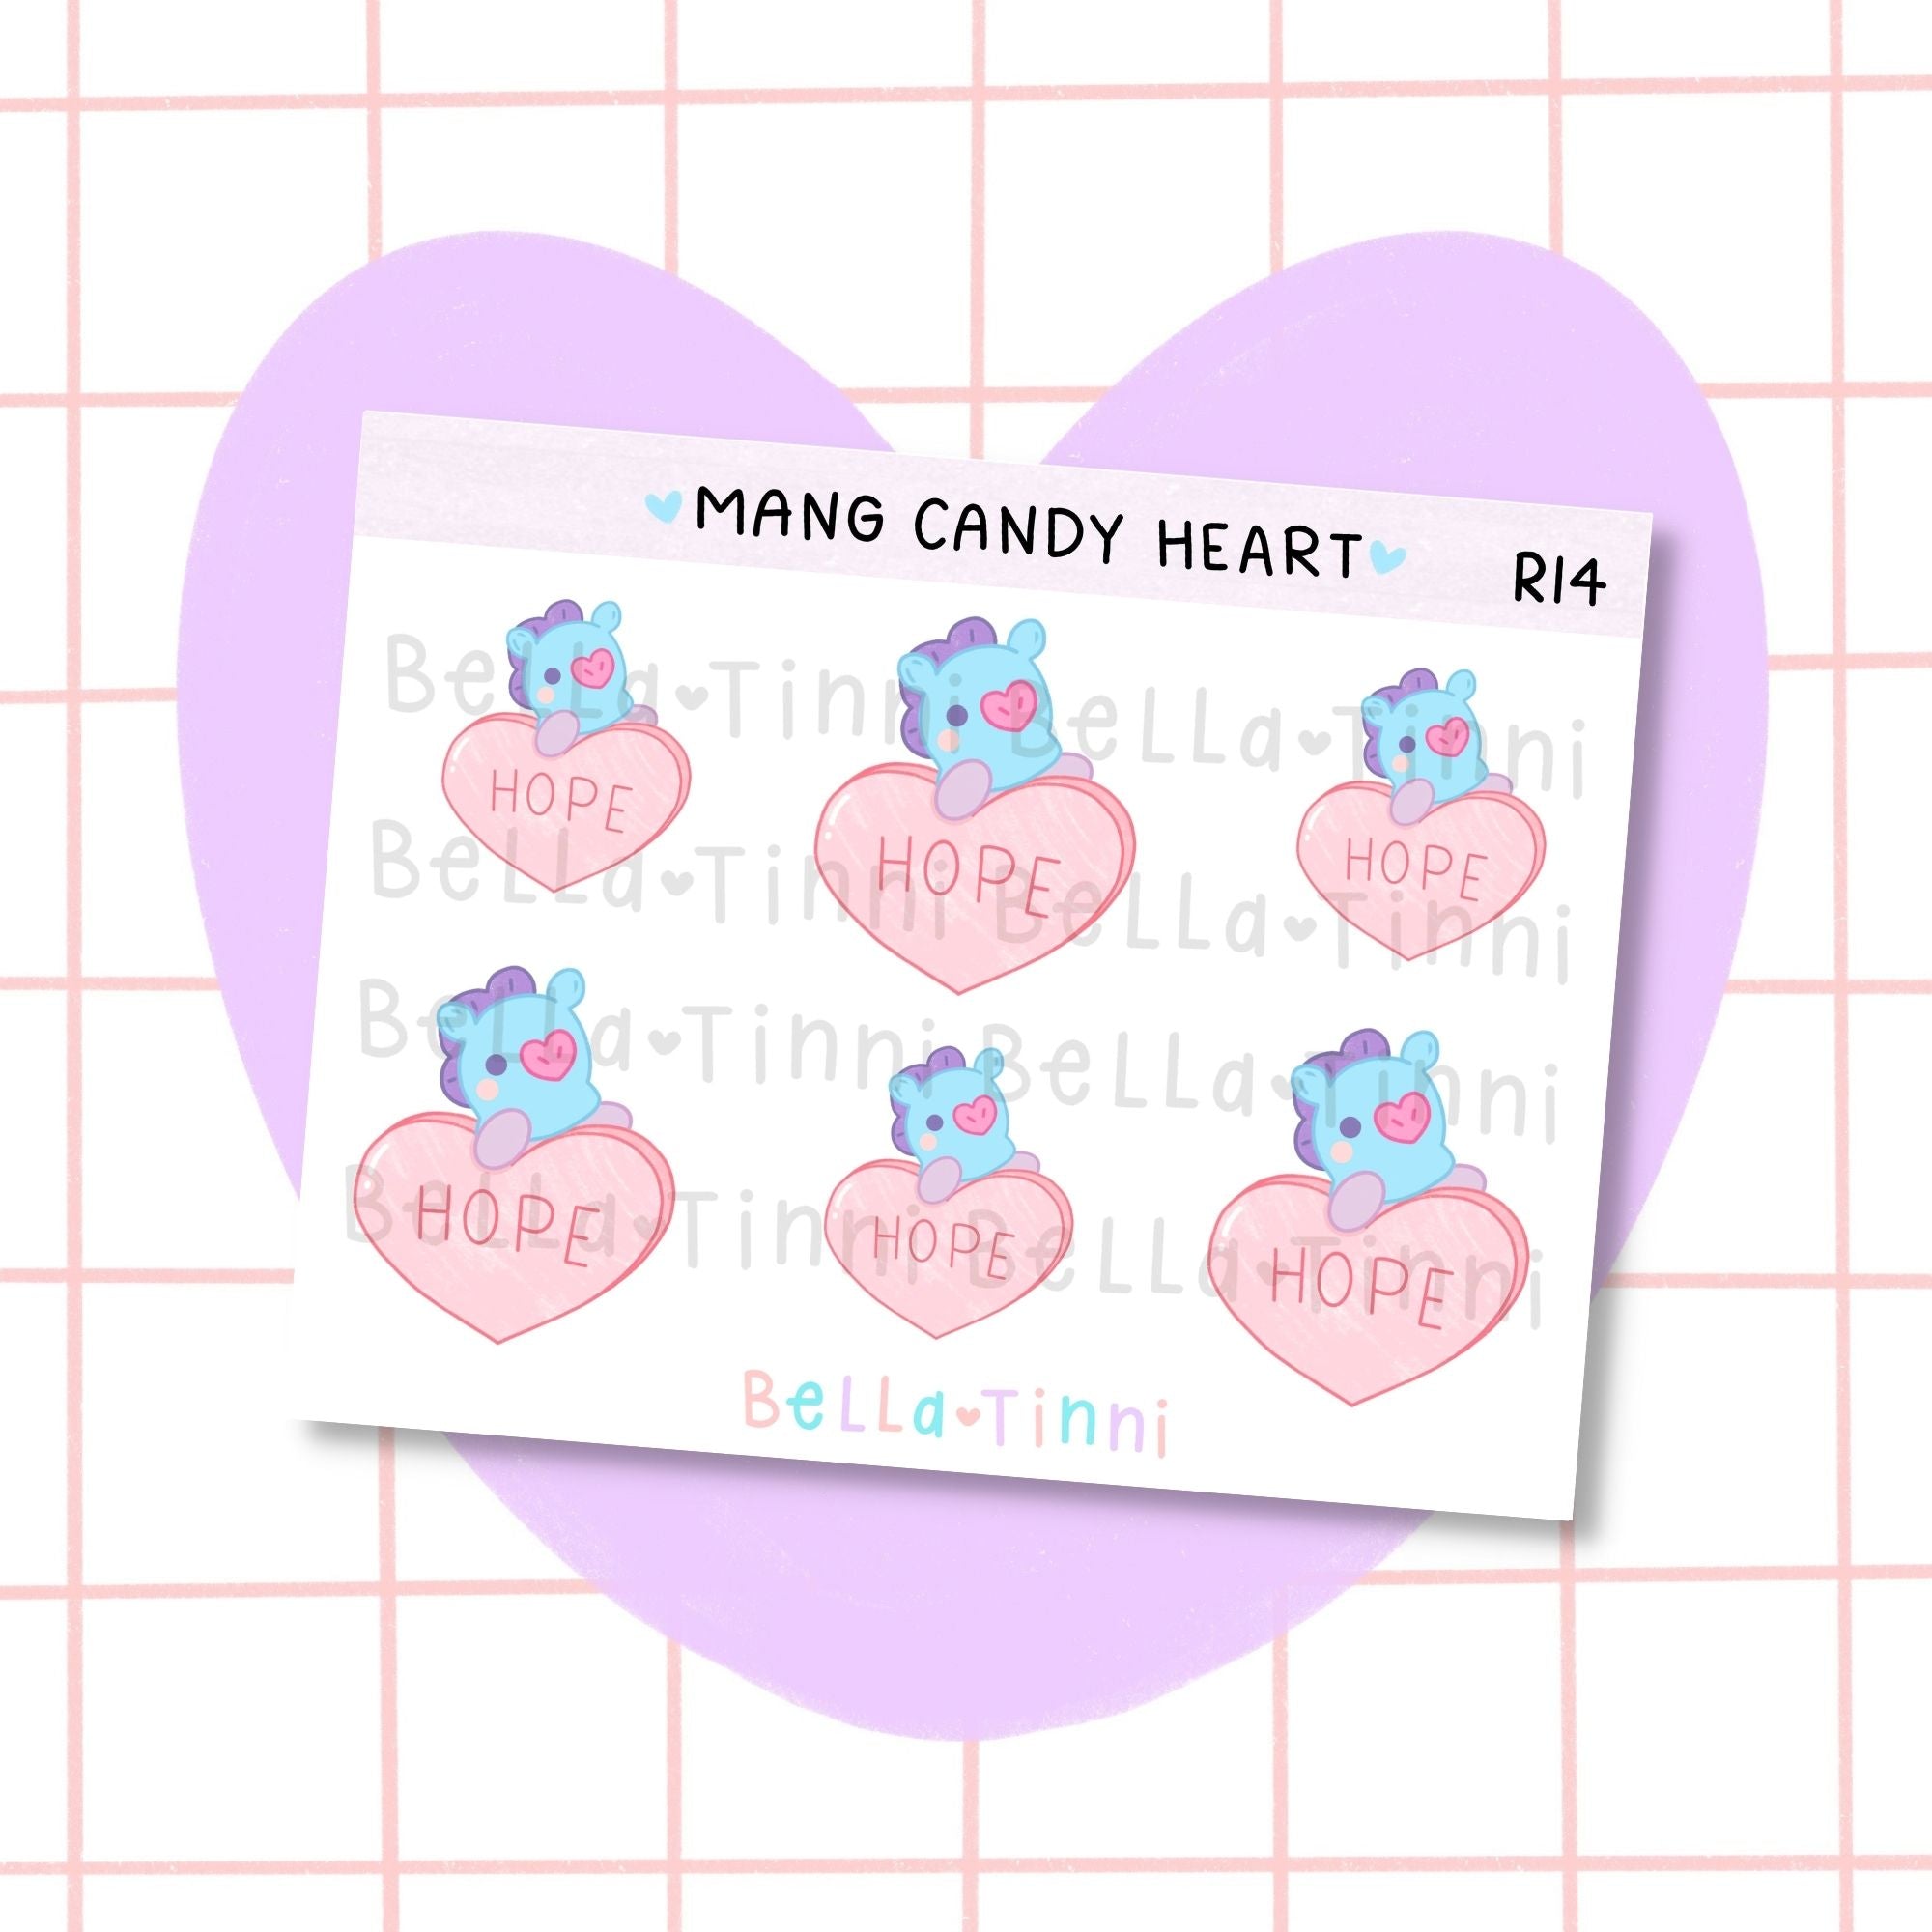 Mang Candy Heart - R14